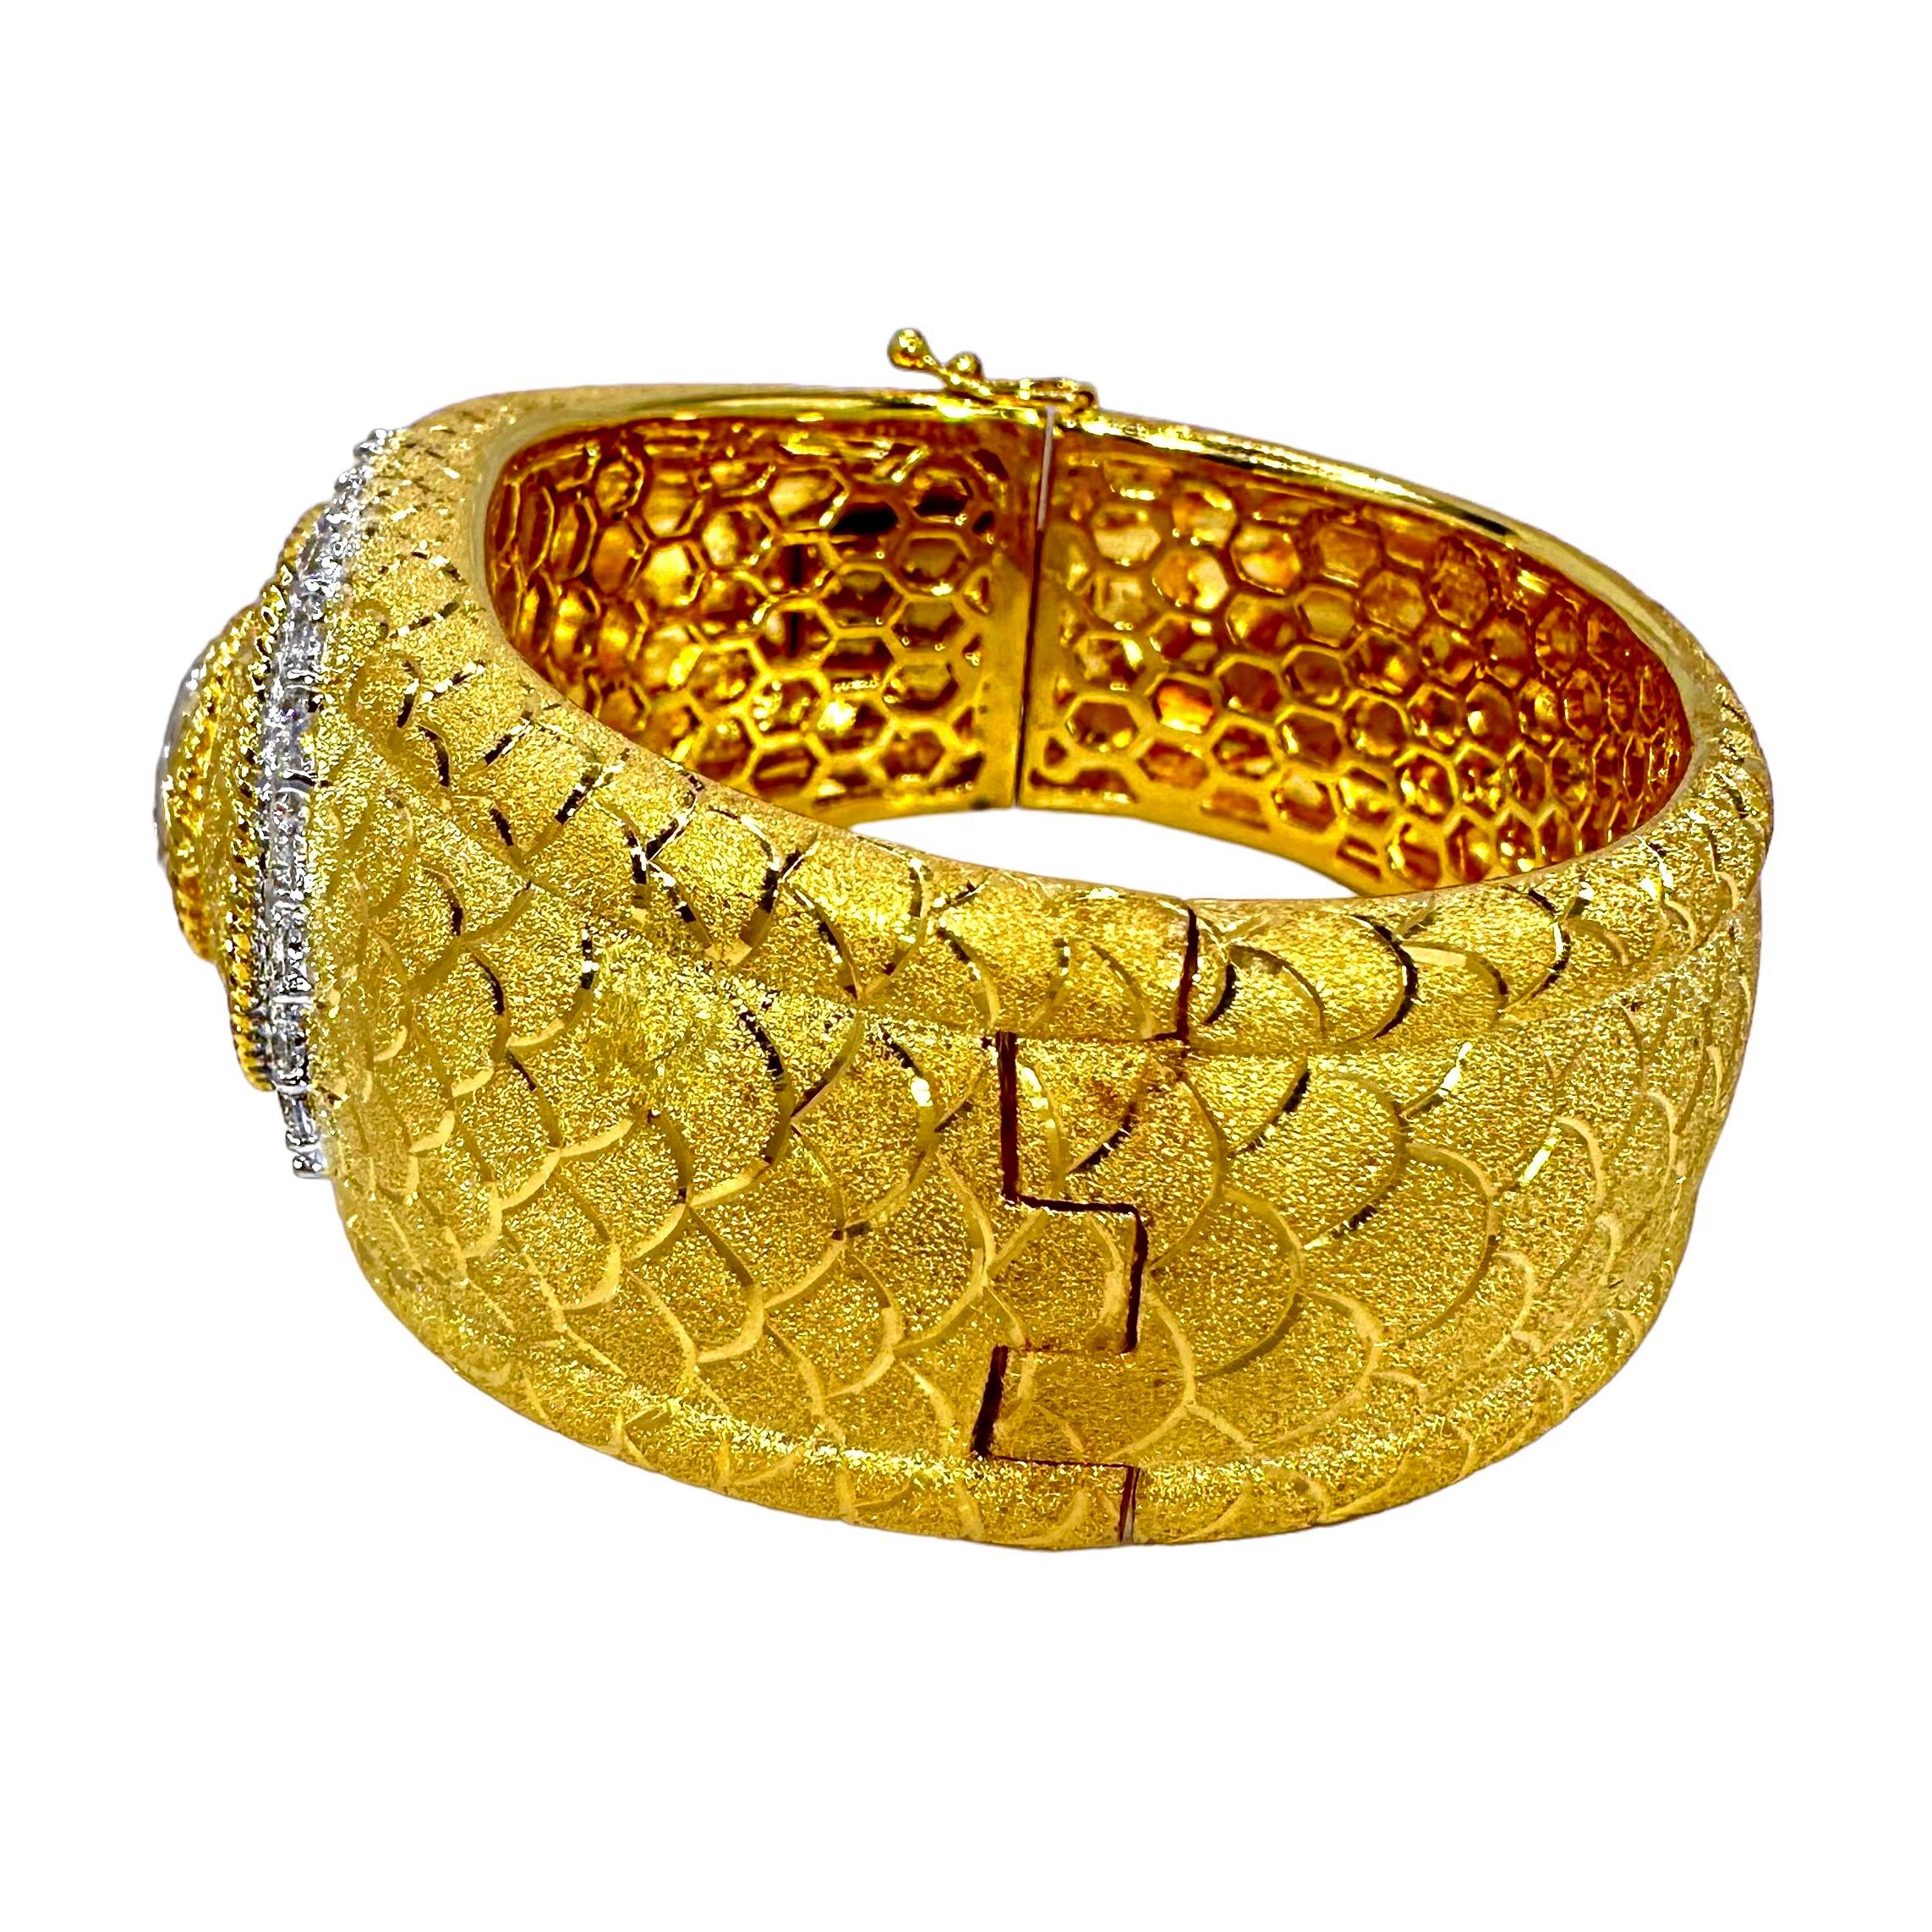 Women's Regal Design, Diamond & Florentine Finish 18K Gold Cuff Bracelet 1.25 Inch Wide For Sale